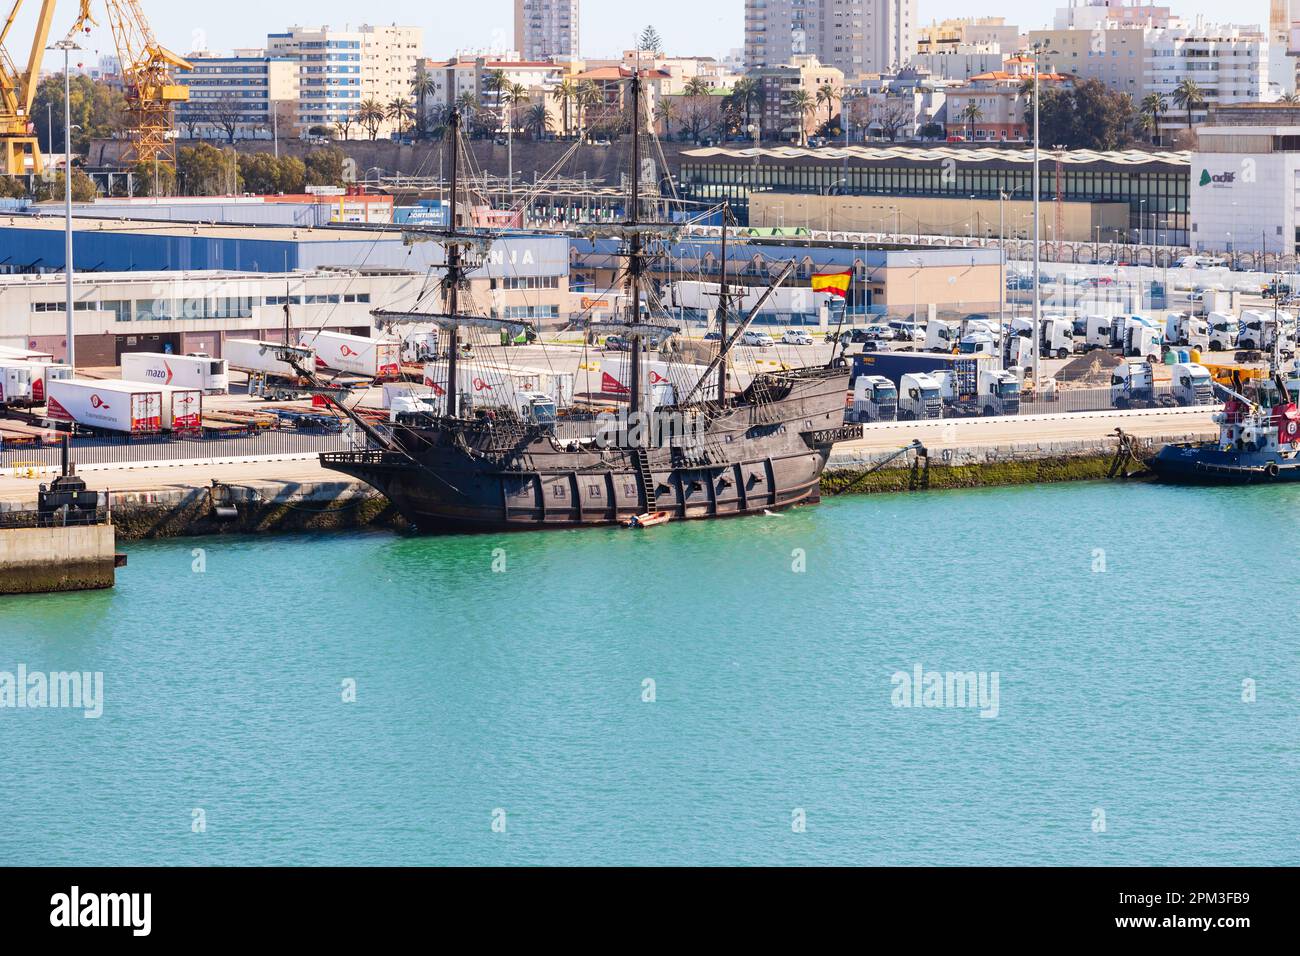 Nao Santa Maria. Replica square sail ship of Christopher Columbus boat. Moored at Cadiz, Andalusia, Spain. Cristoforo Colombo, Huelva. Historic. Moore Stock Photo